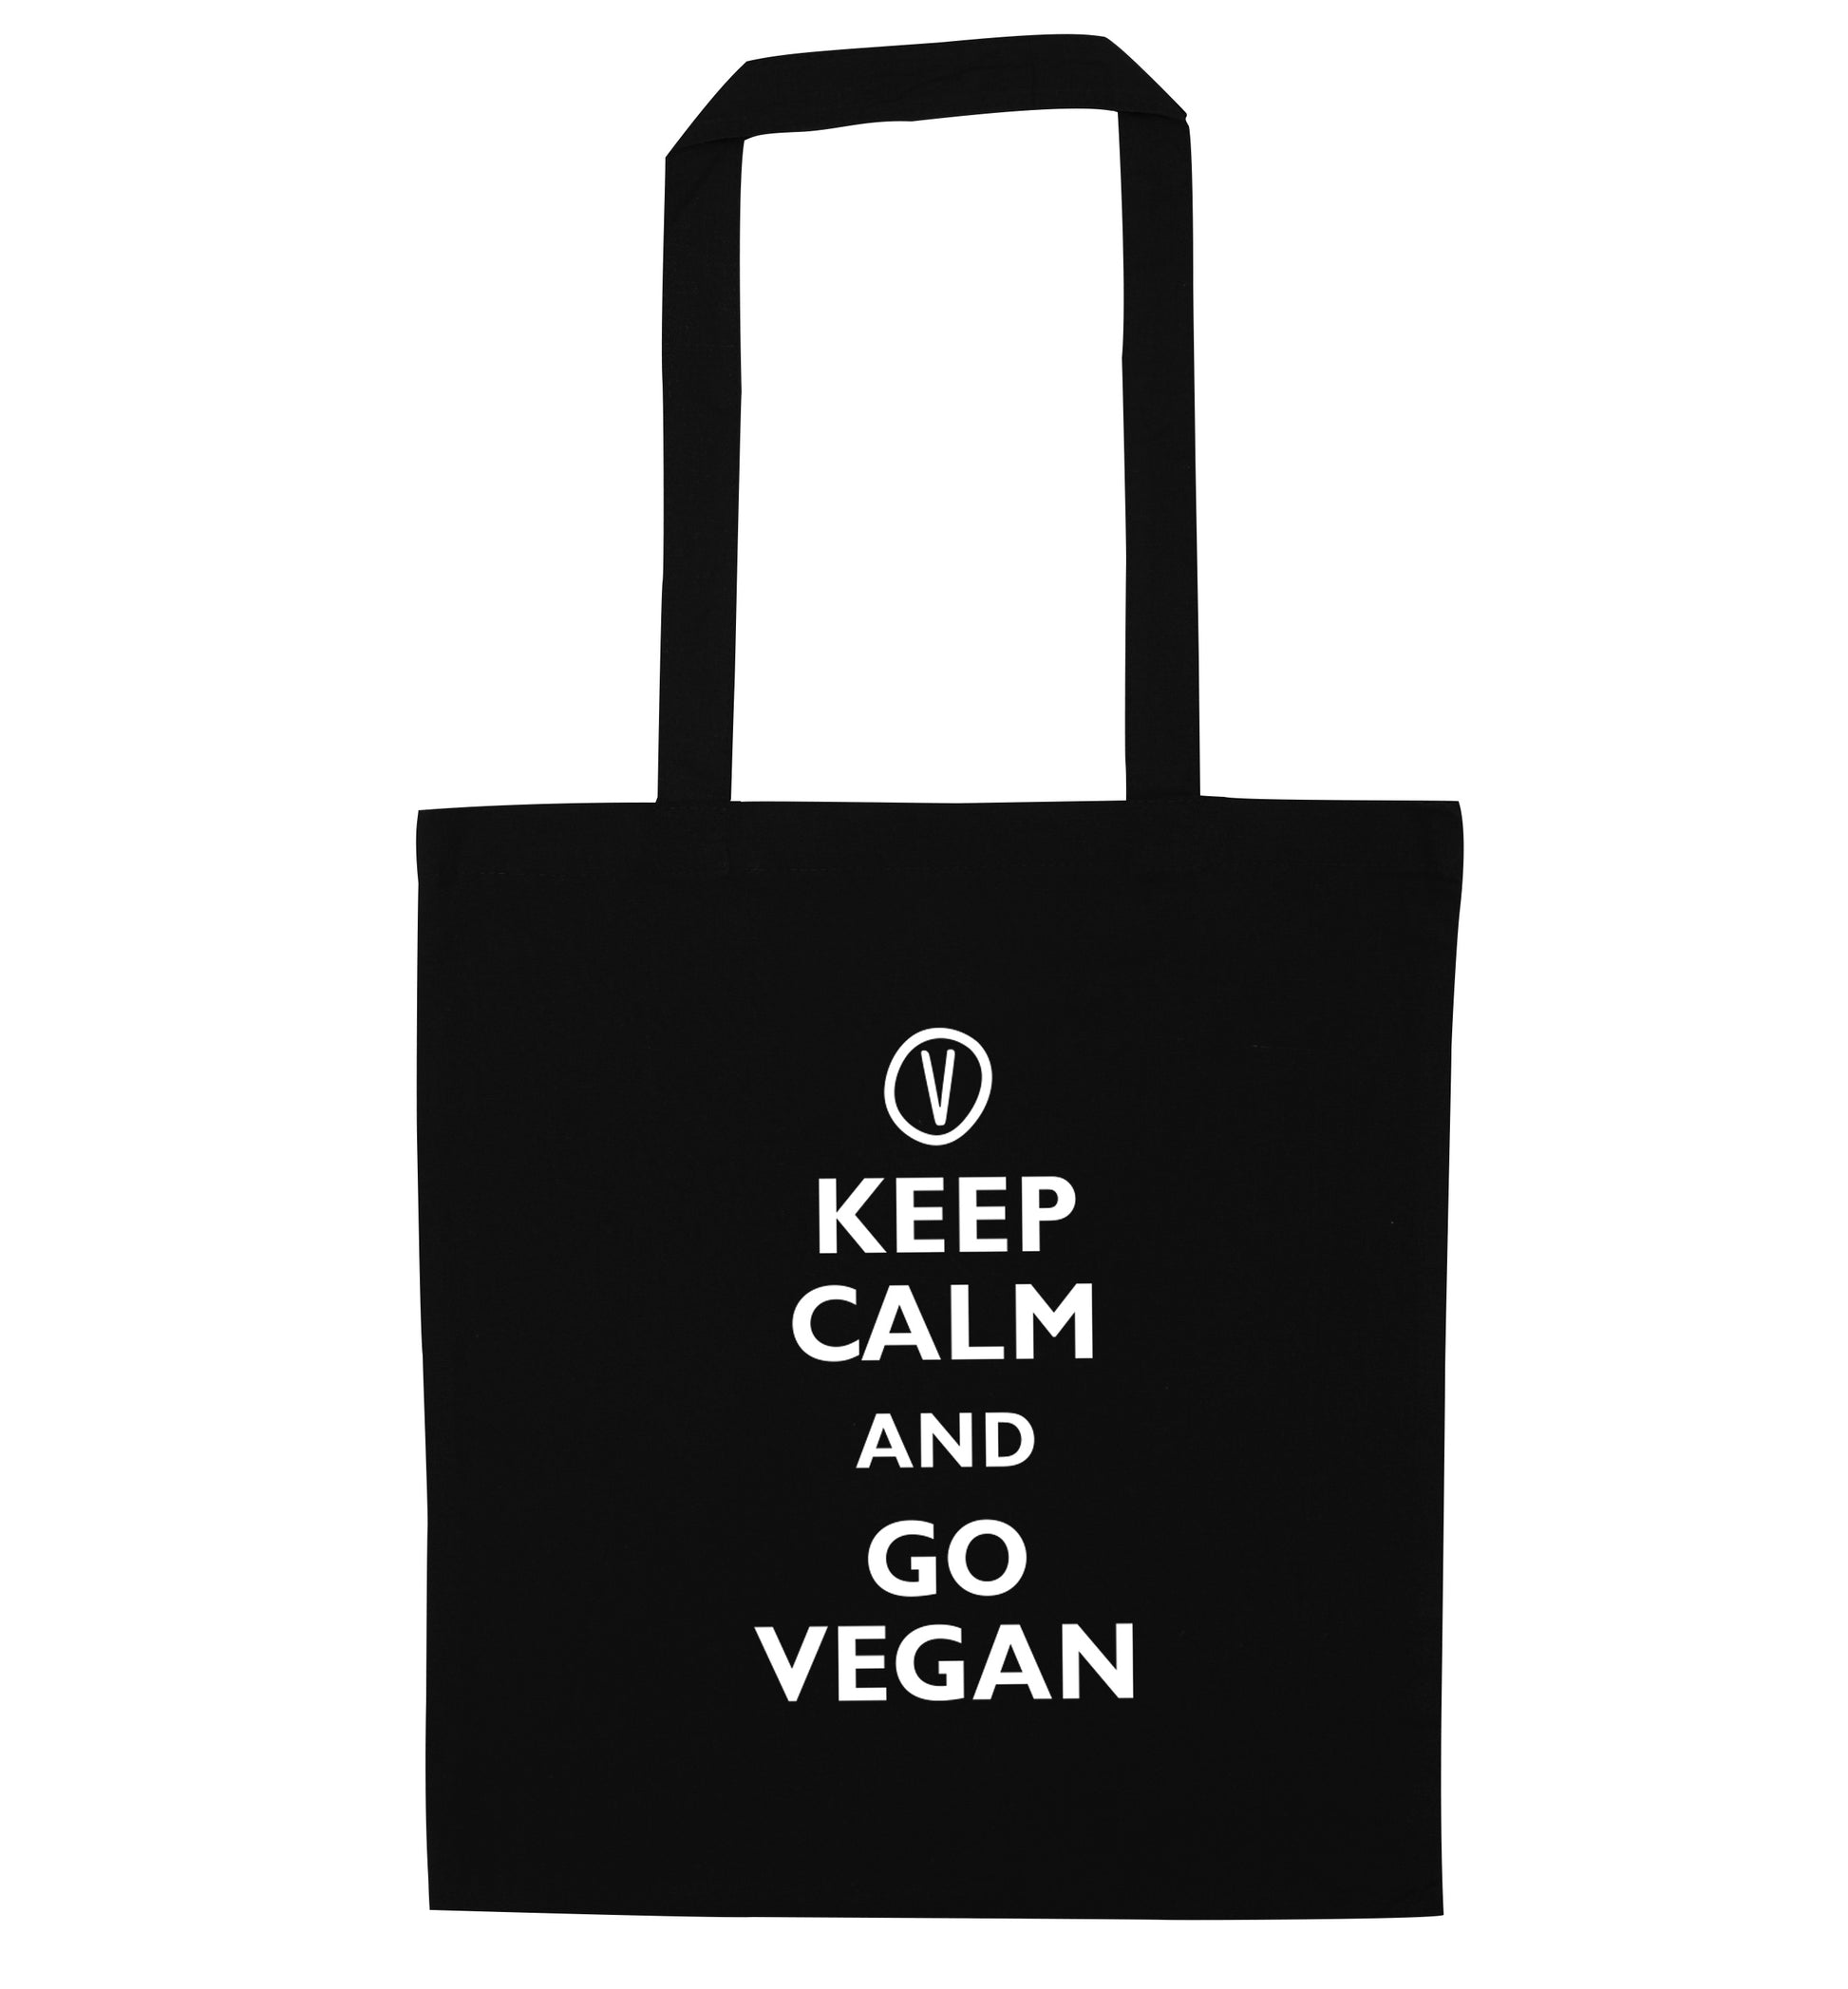 Keep calm and go vegan black tote bag